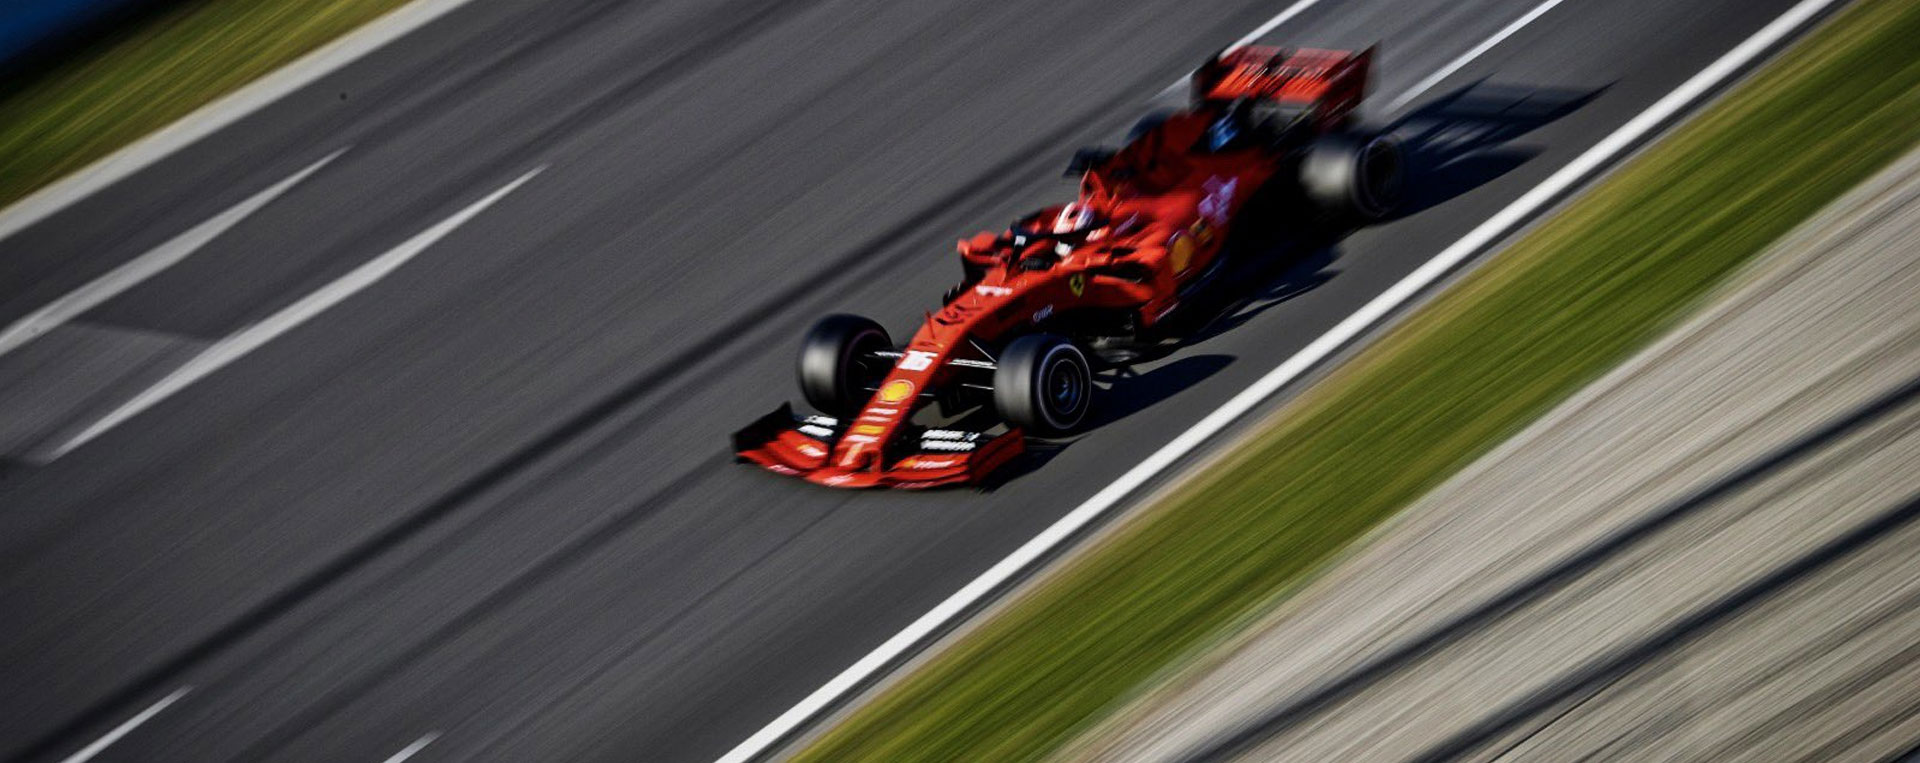 Charles Leclerc - Ferrari 2019